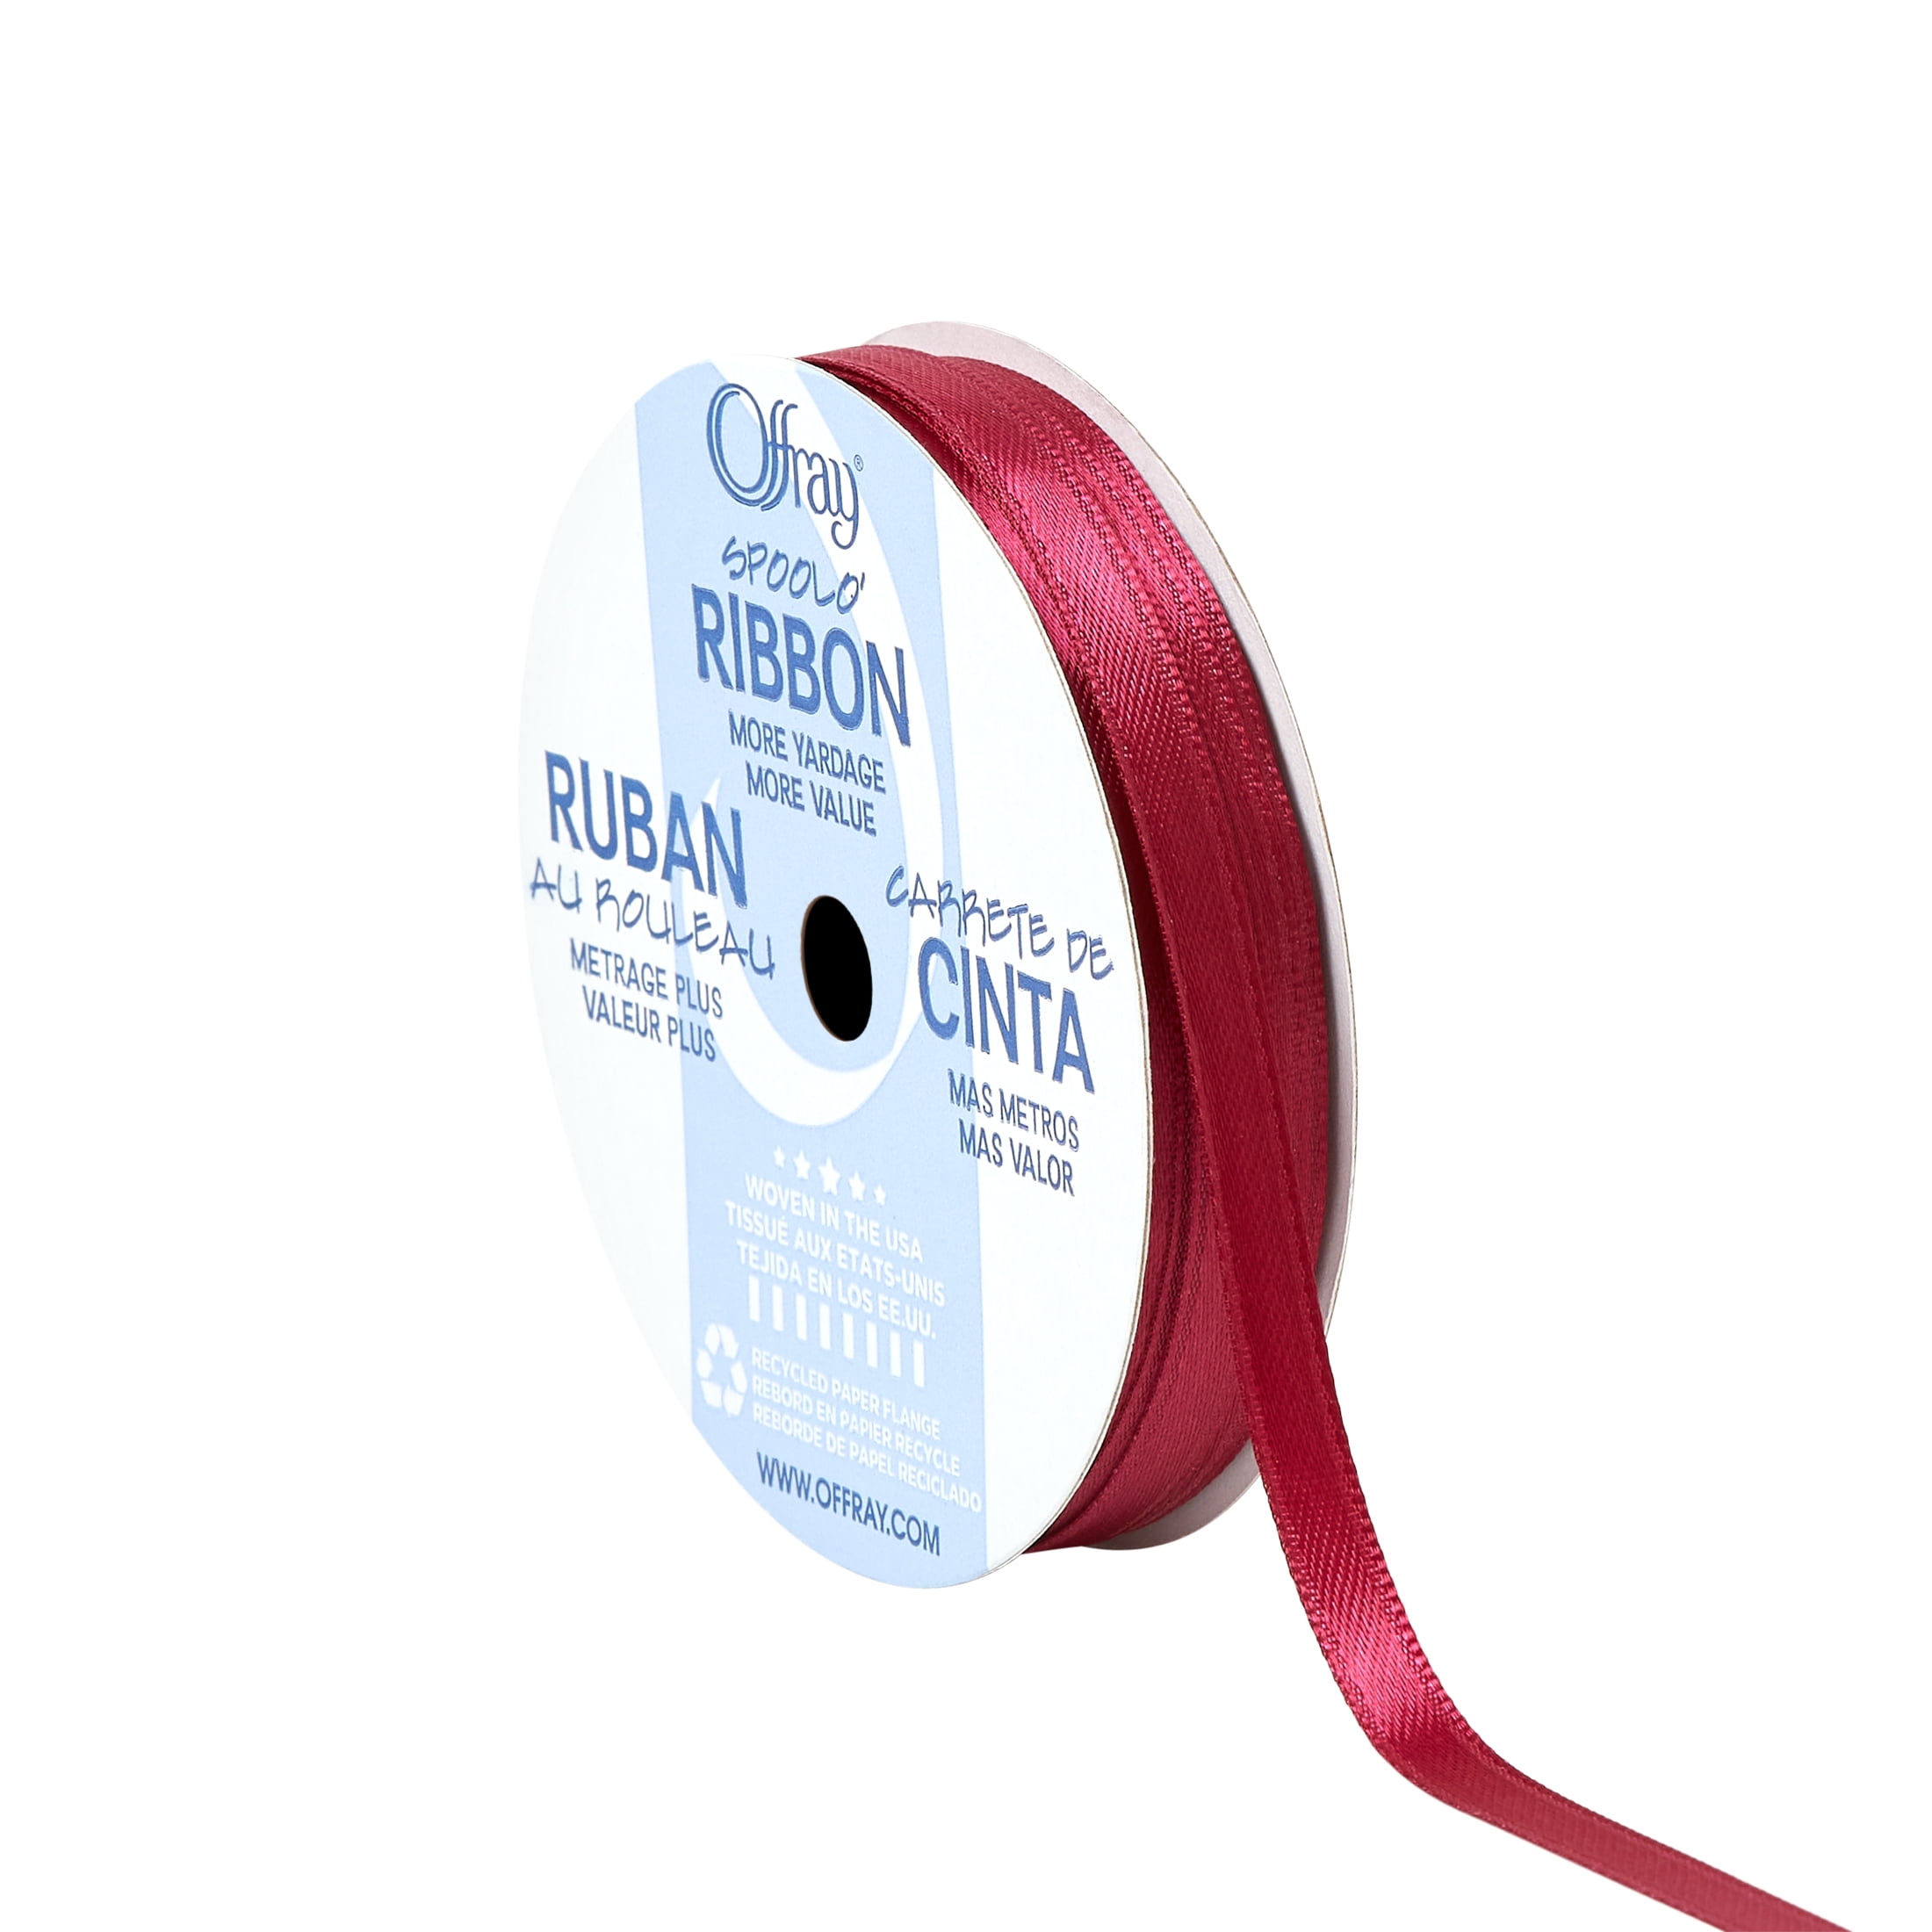 Offray Ribbon, Natural 2 1/2 inch Woven Burlap Woven Ribbon, 9 feet